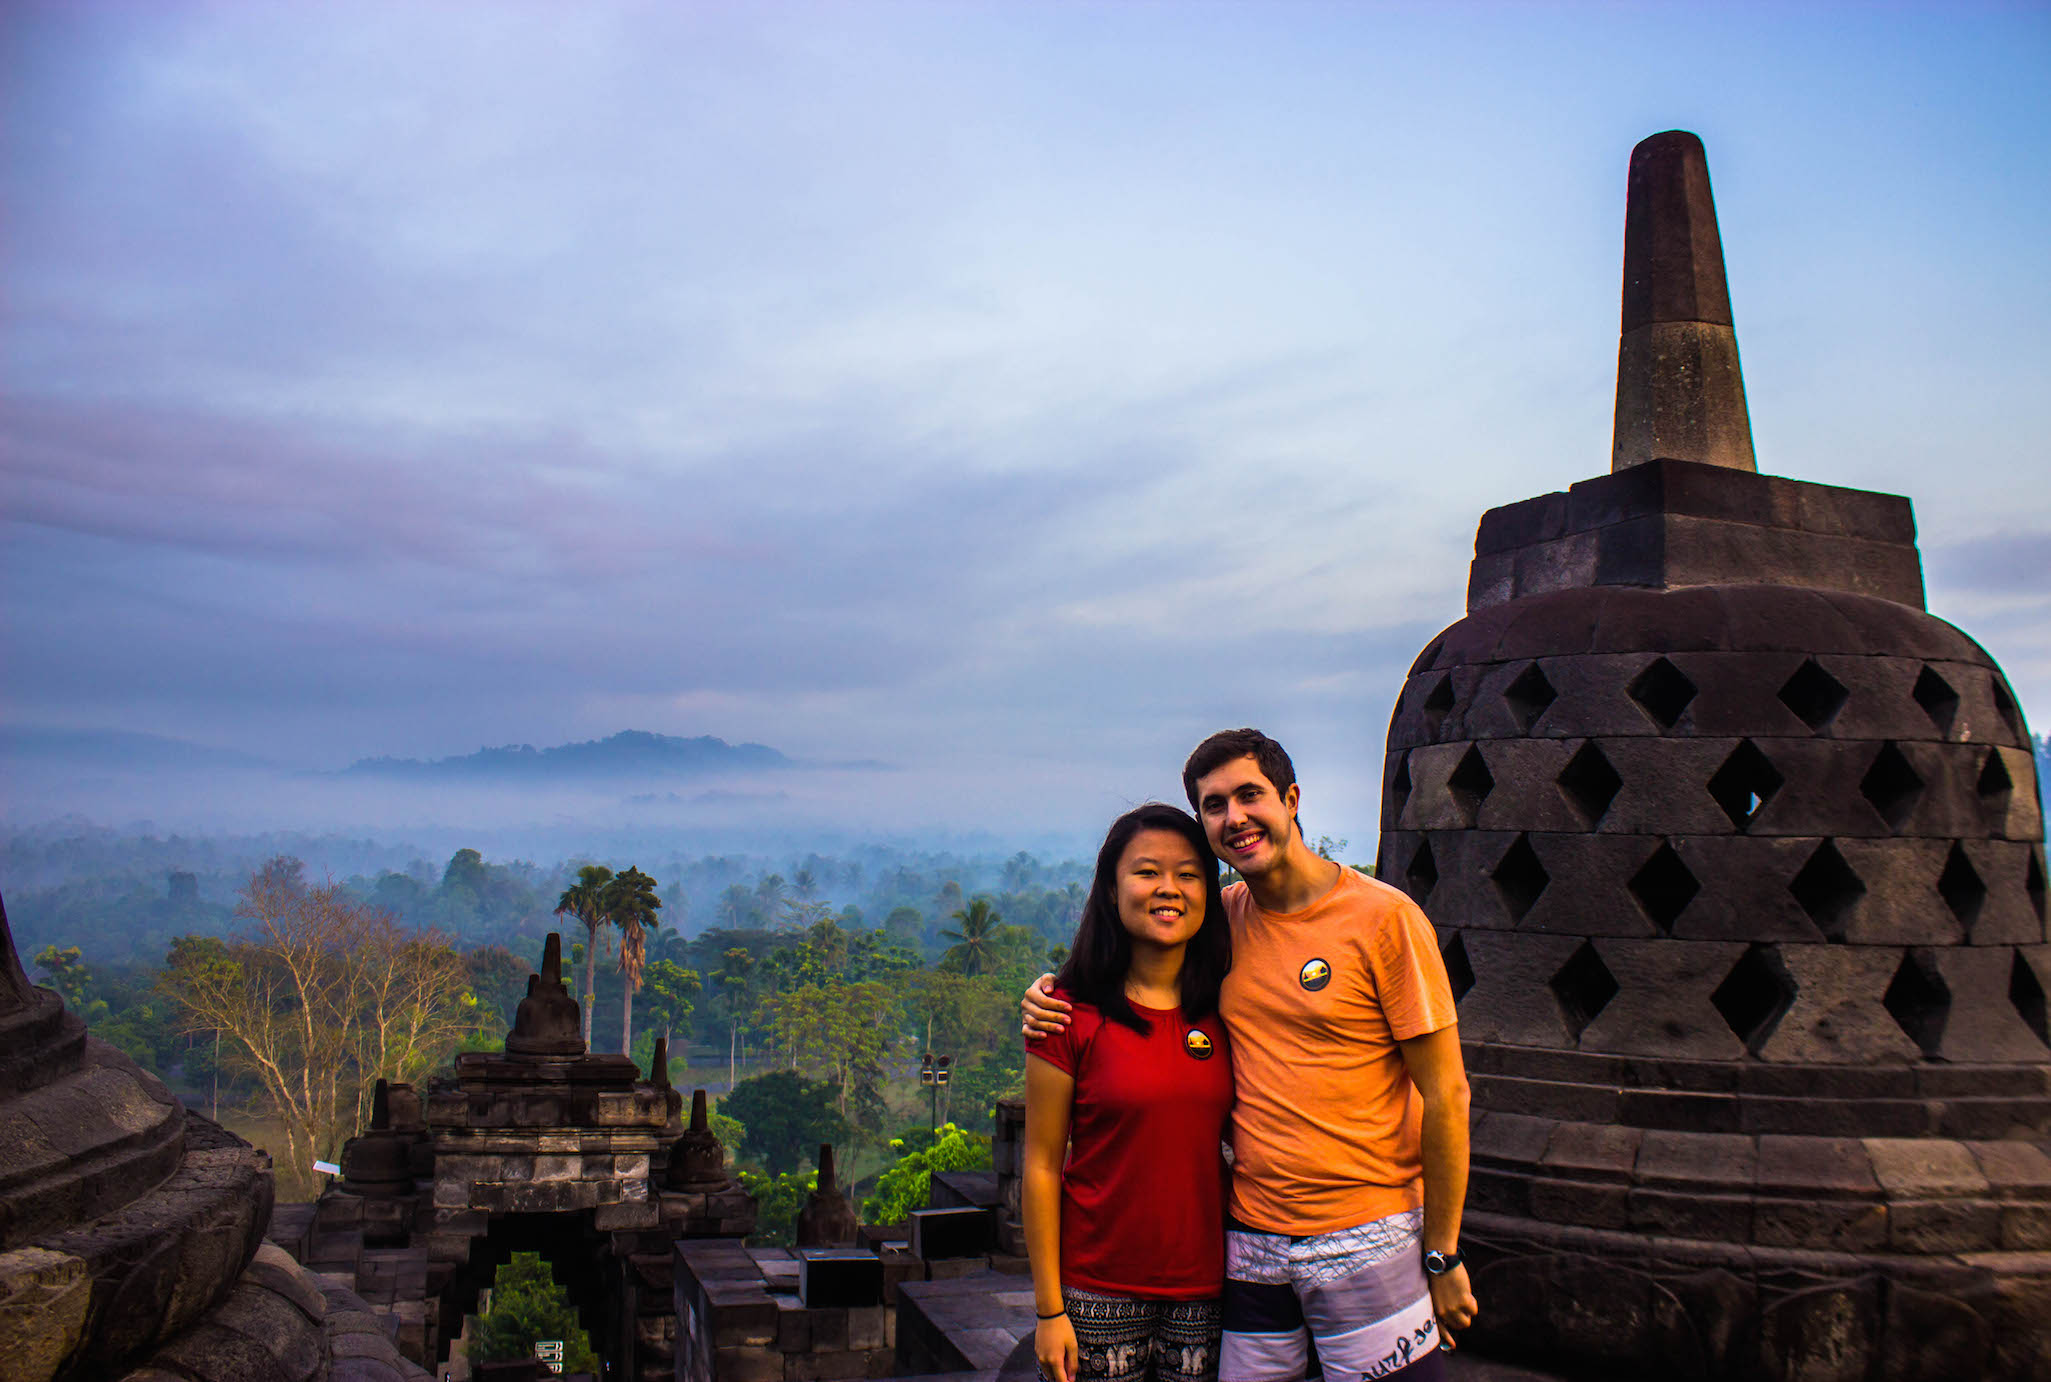 Julie and Carlos overlooking Borobudur, Indonesia